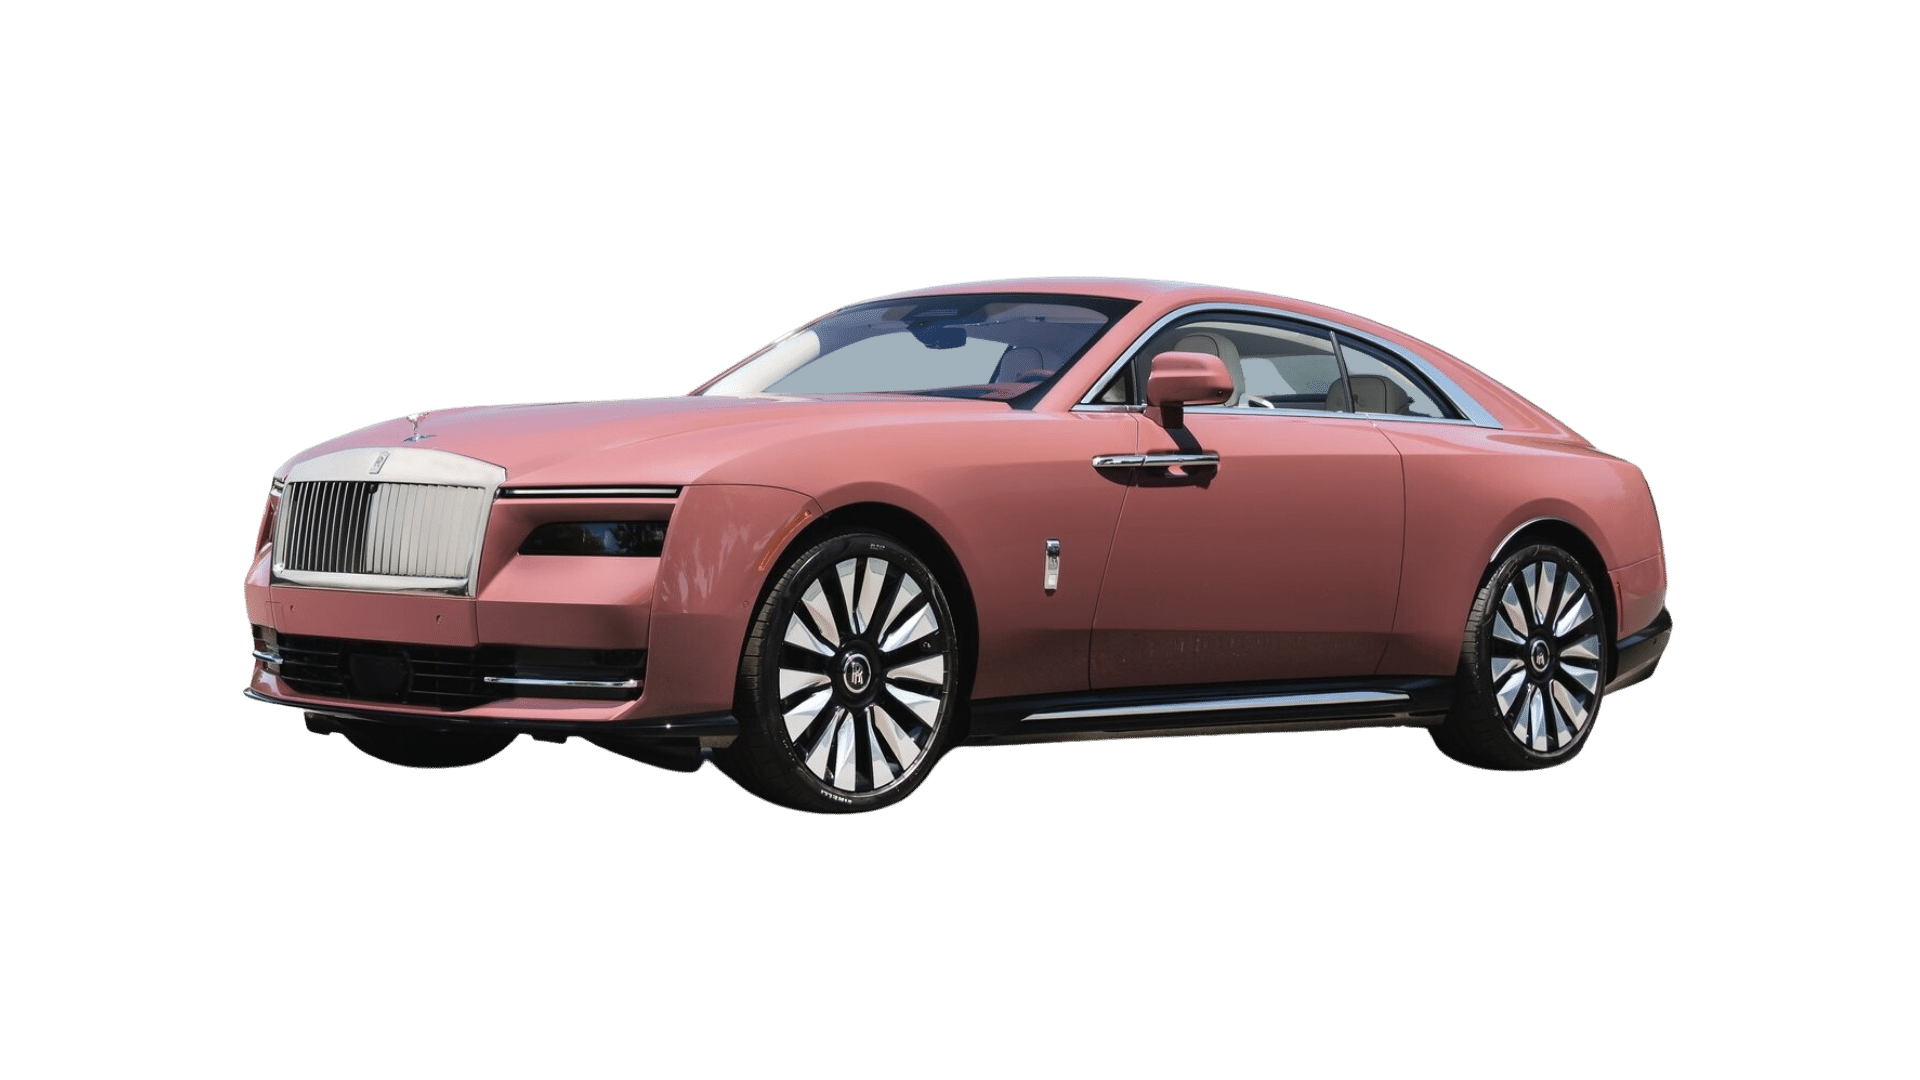 Charging your Rolls-Royce Spectre